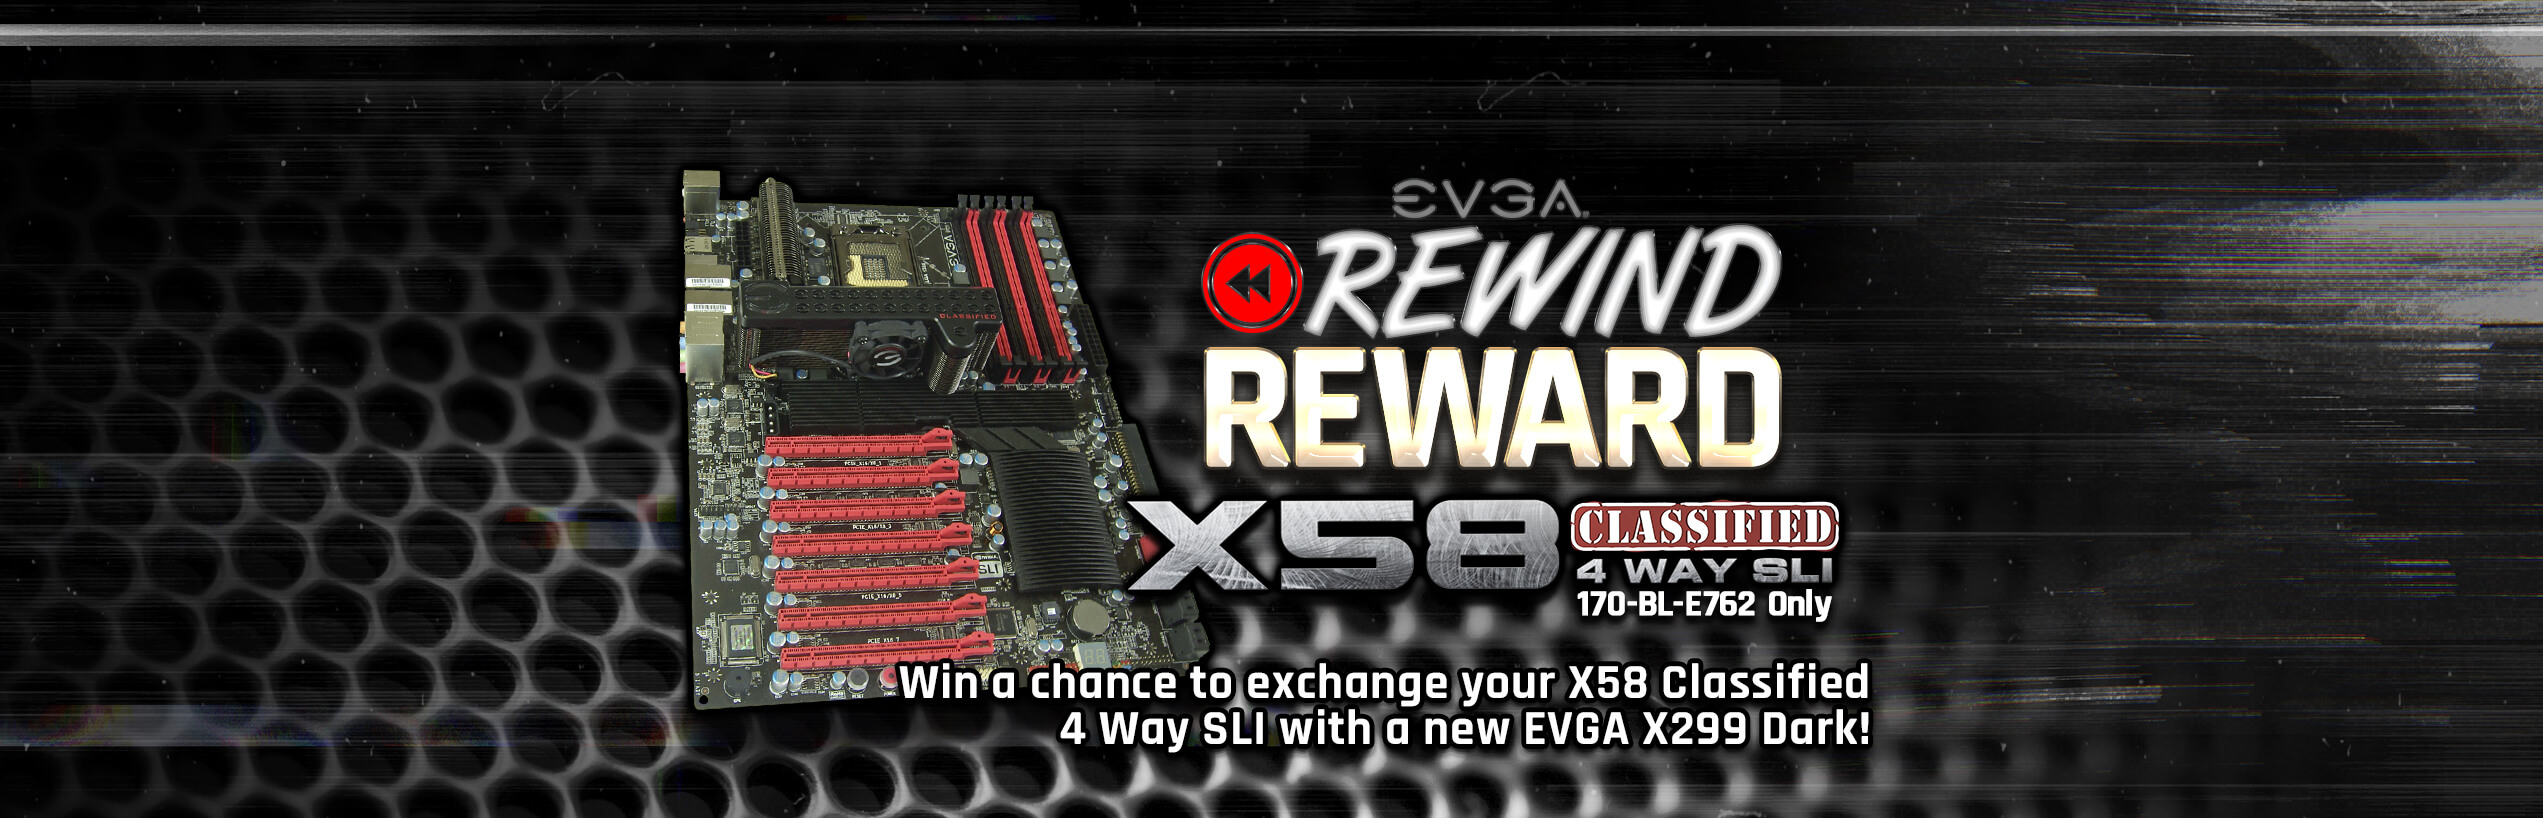 EVGA X58 Rewind Reward Giveaway